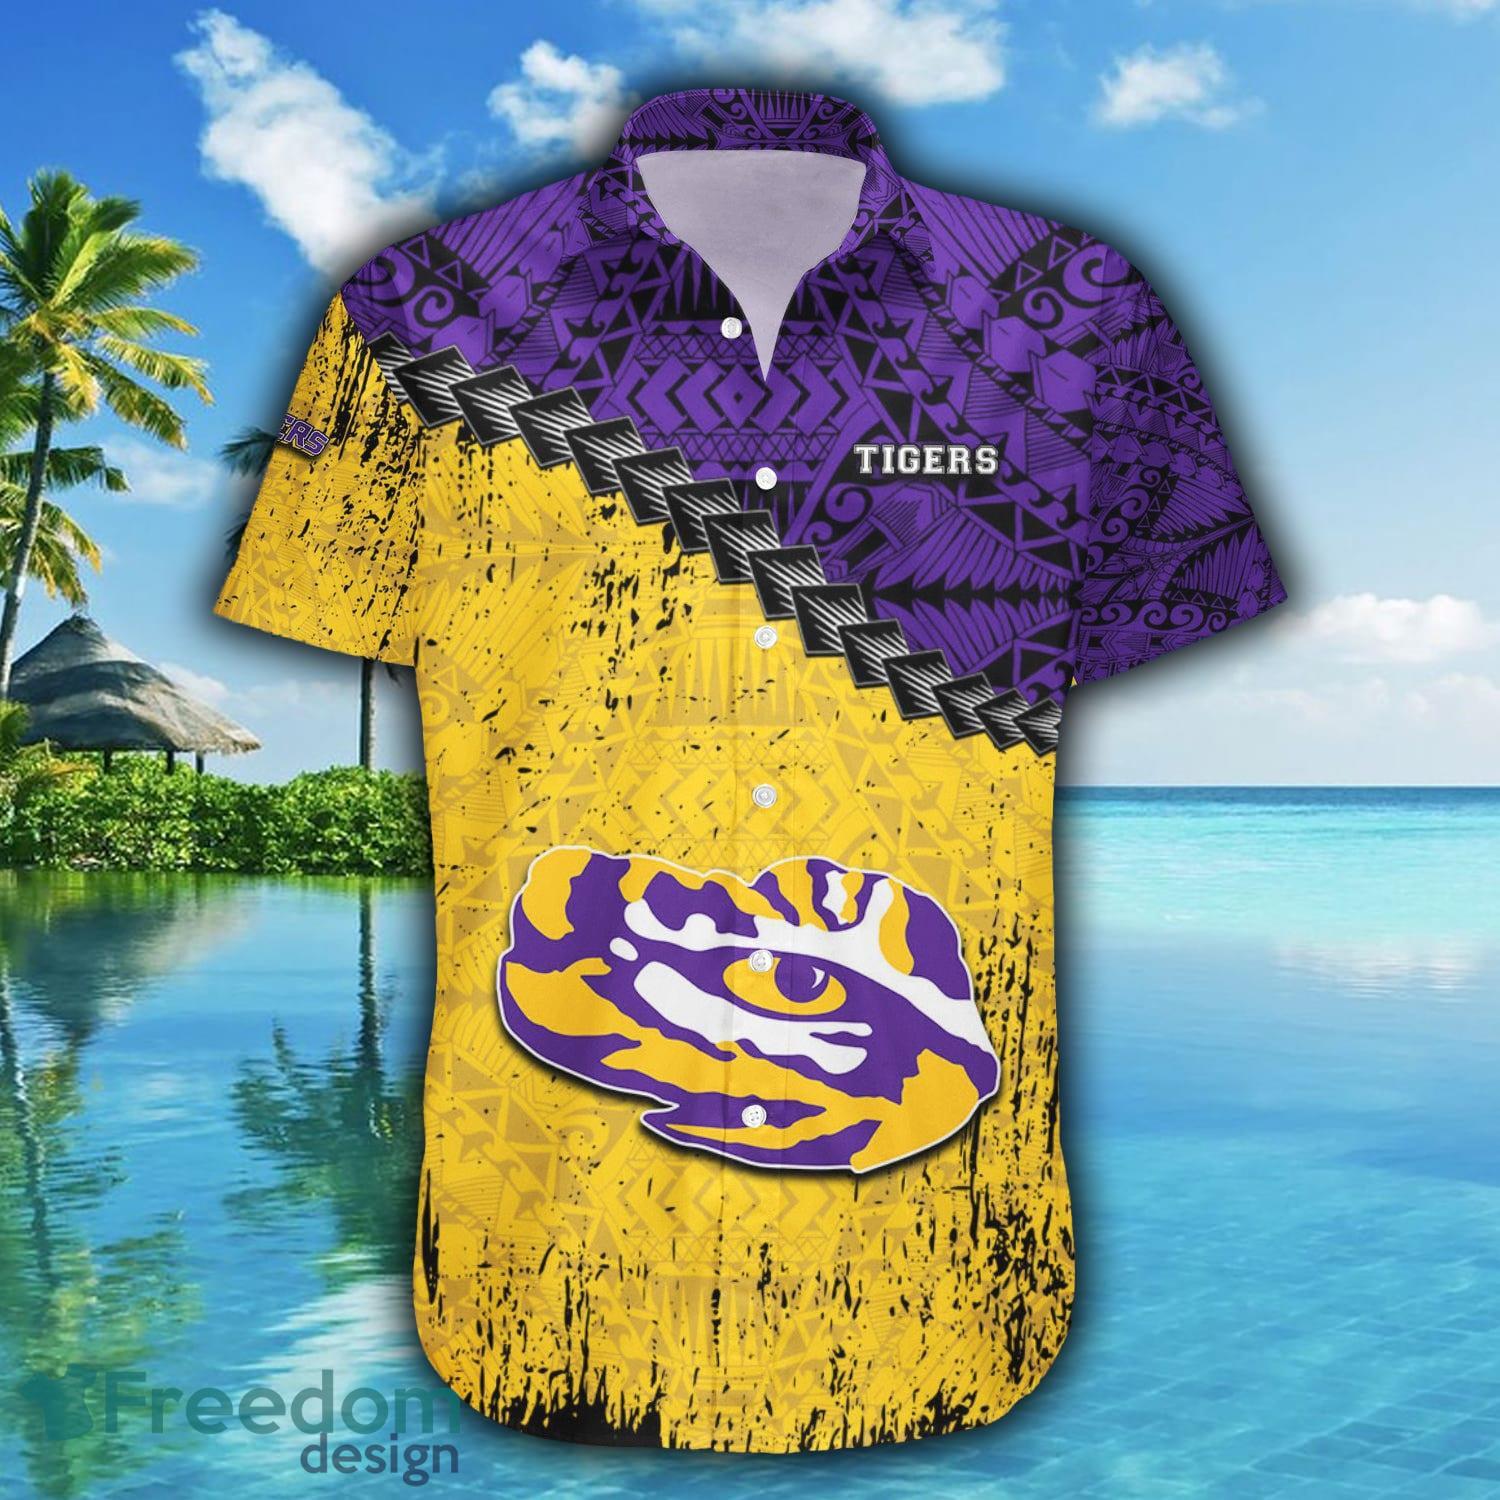 Men s LSU Louisiana State University With Mascots Summer Hawaiian Shirt -  Limotees